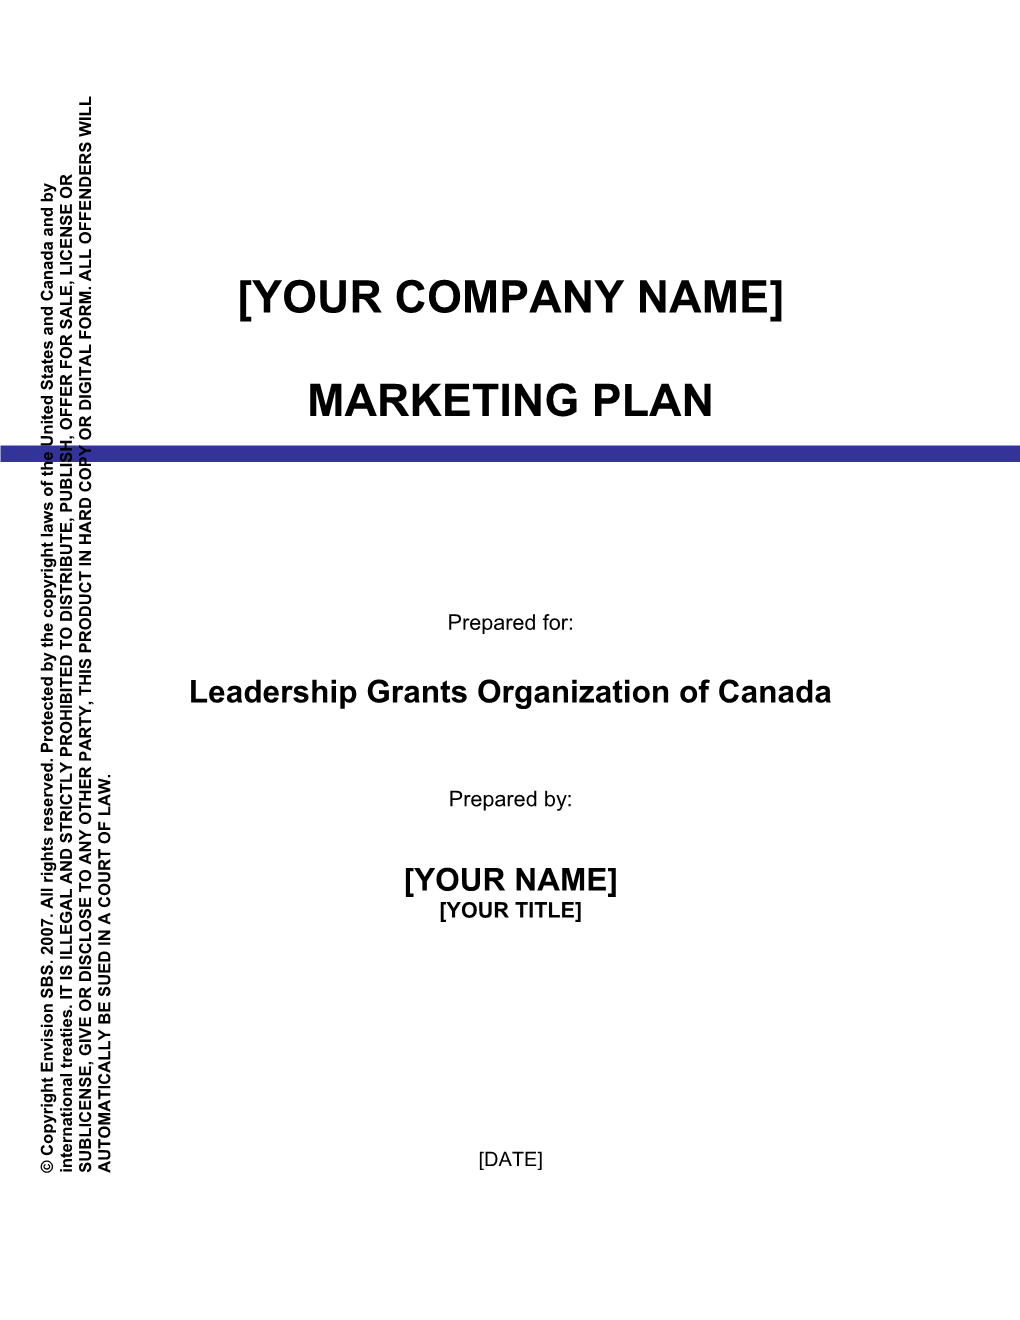 Leadership Grants Organization of Canada